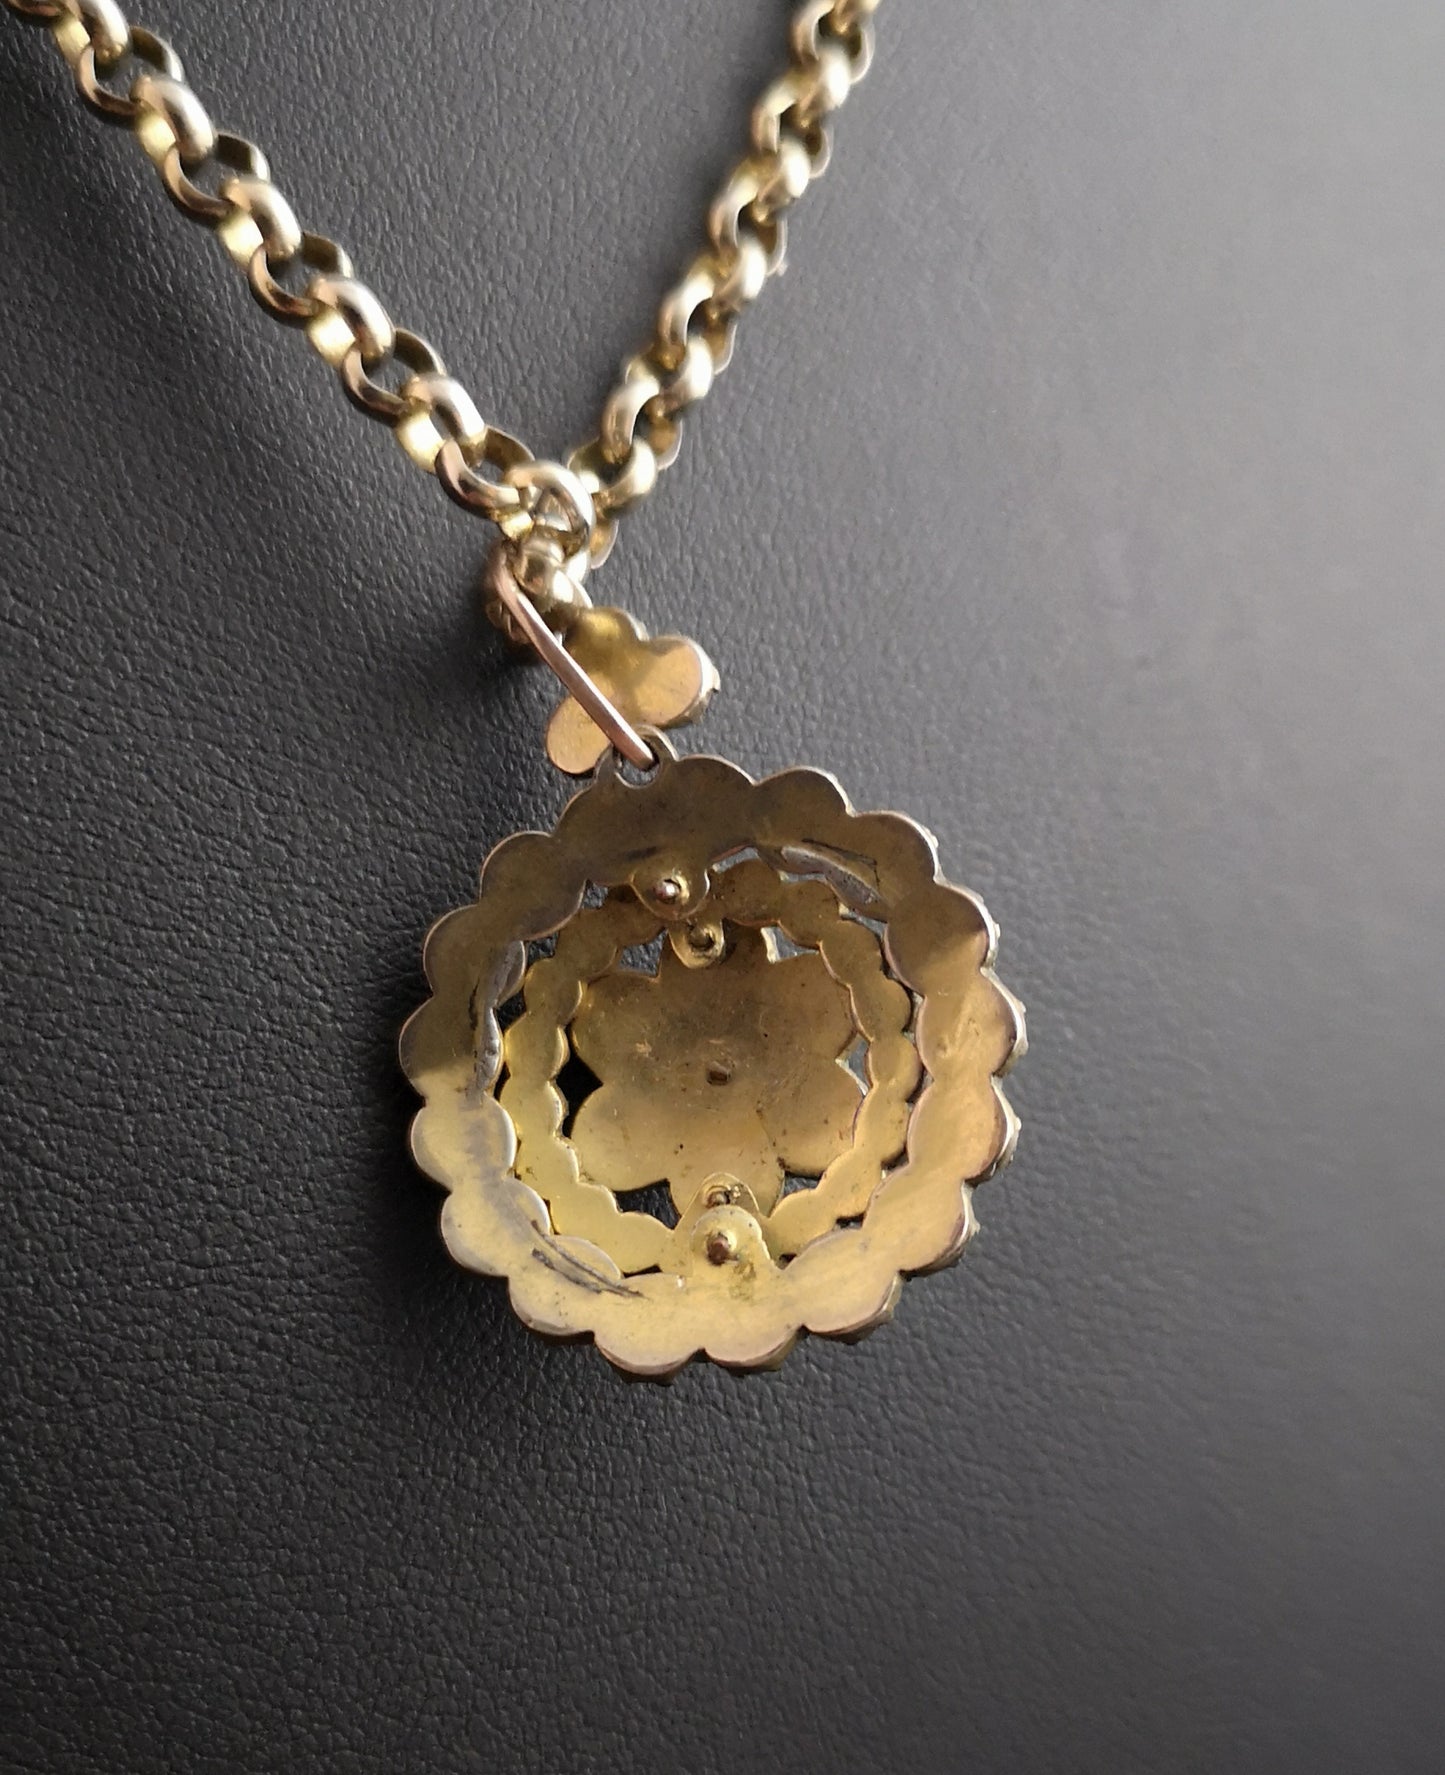 Victorian bohemian garnet pendant, forget me not